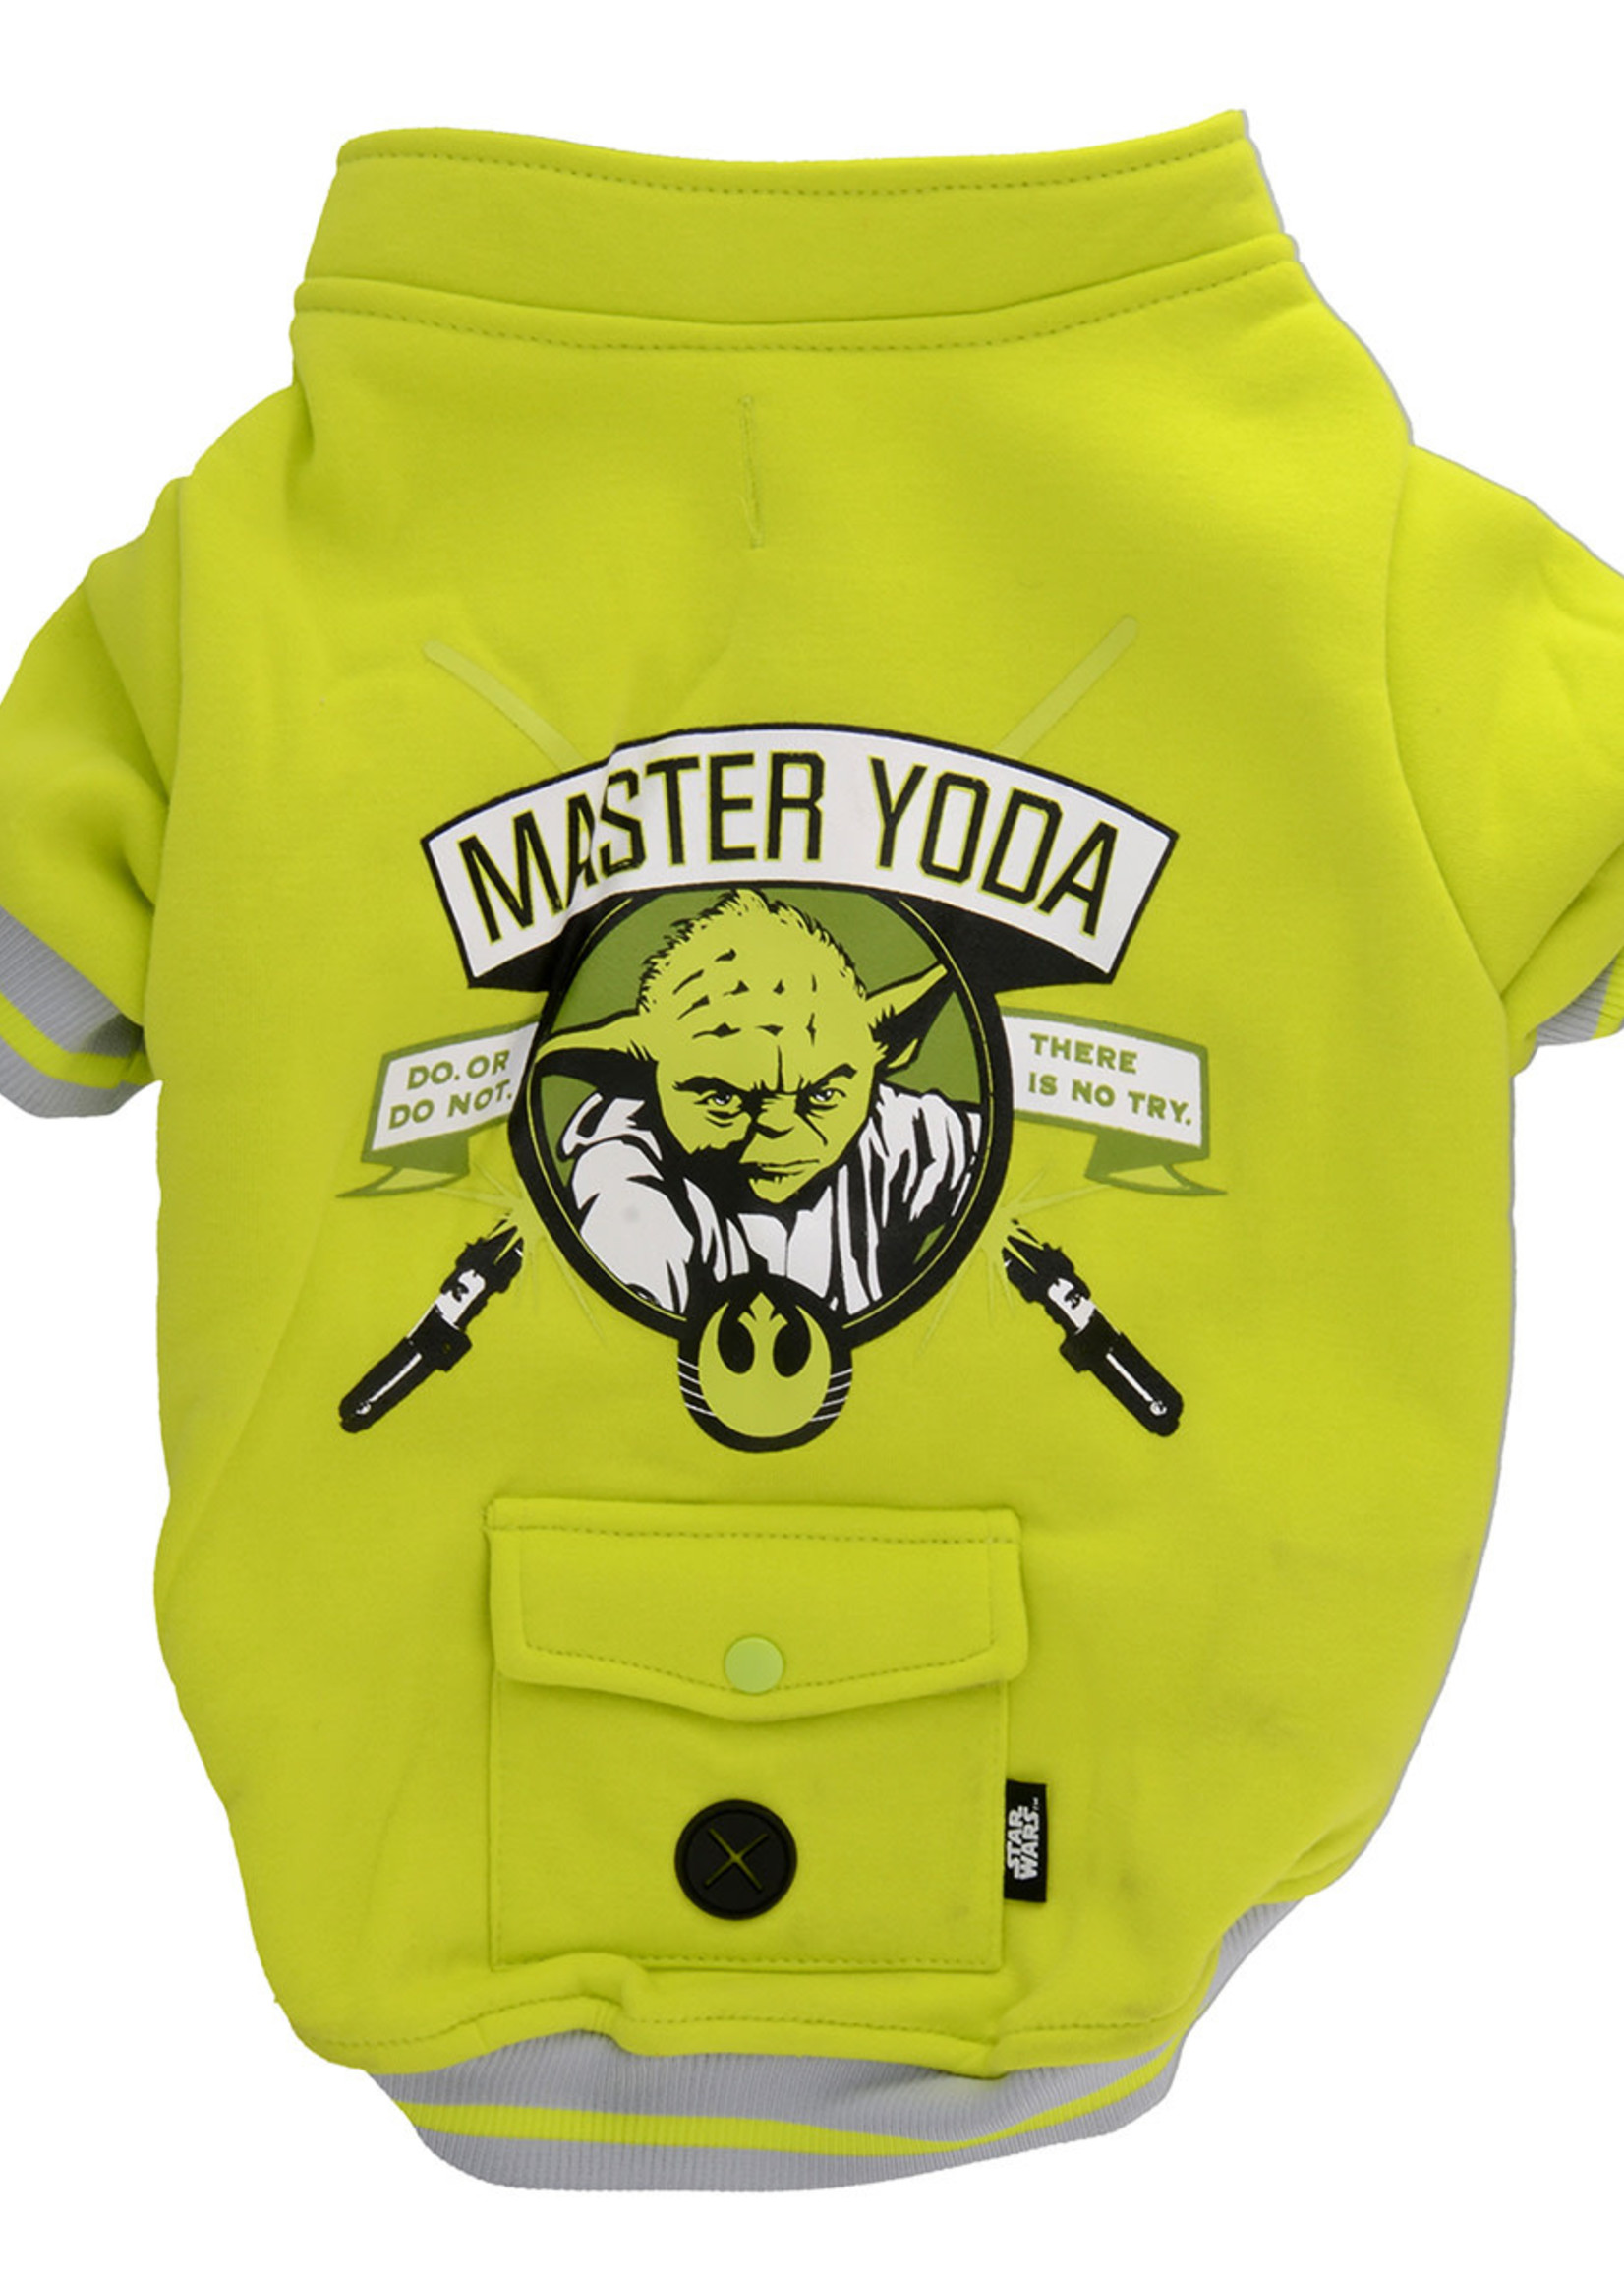 Protect Me - Alert Series Protect Me Alert Series Yoda Fleece Jacket Medium